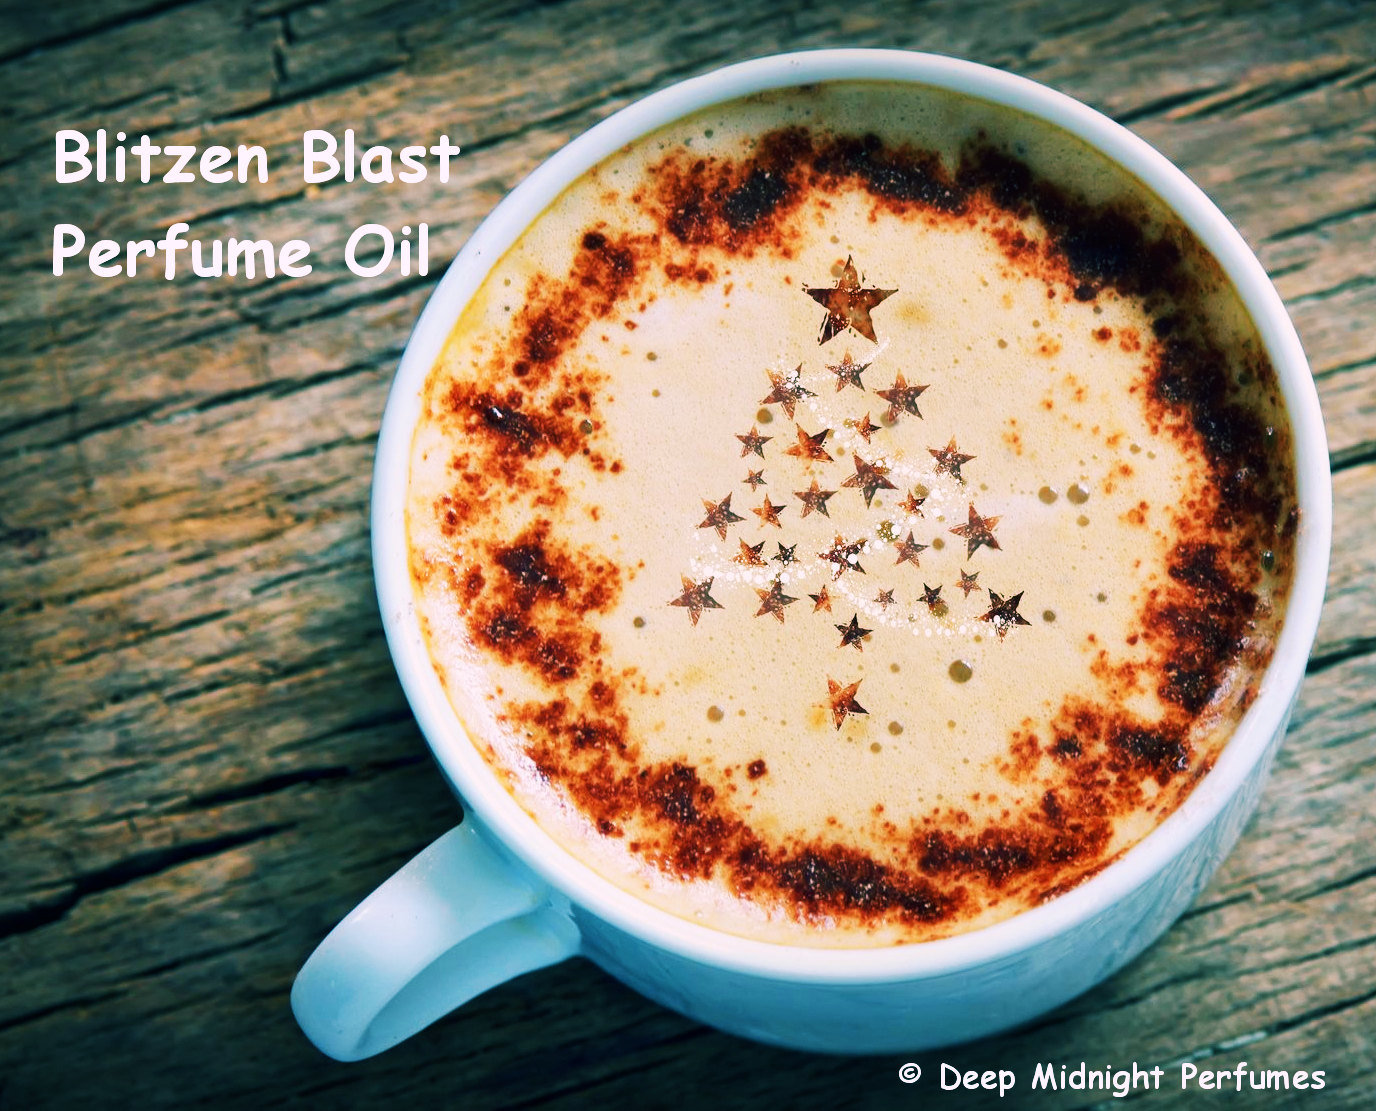 BLITZEN BLAST™ Perfume Oil - Dark Coffee, Spiced Rum, Irish Cream, Cocoa - Chrismas Perfume - Holiday Fragrance